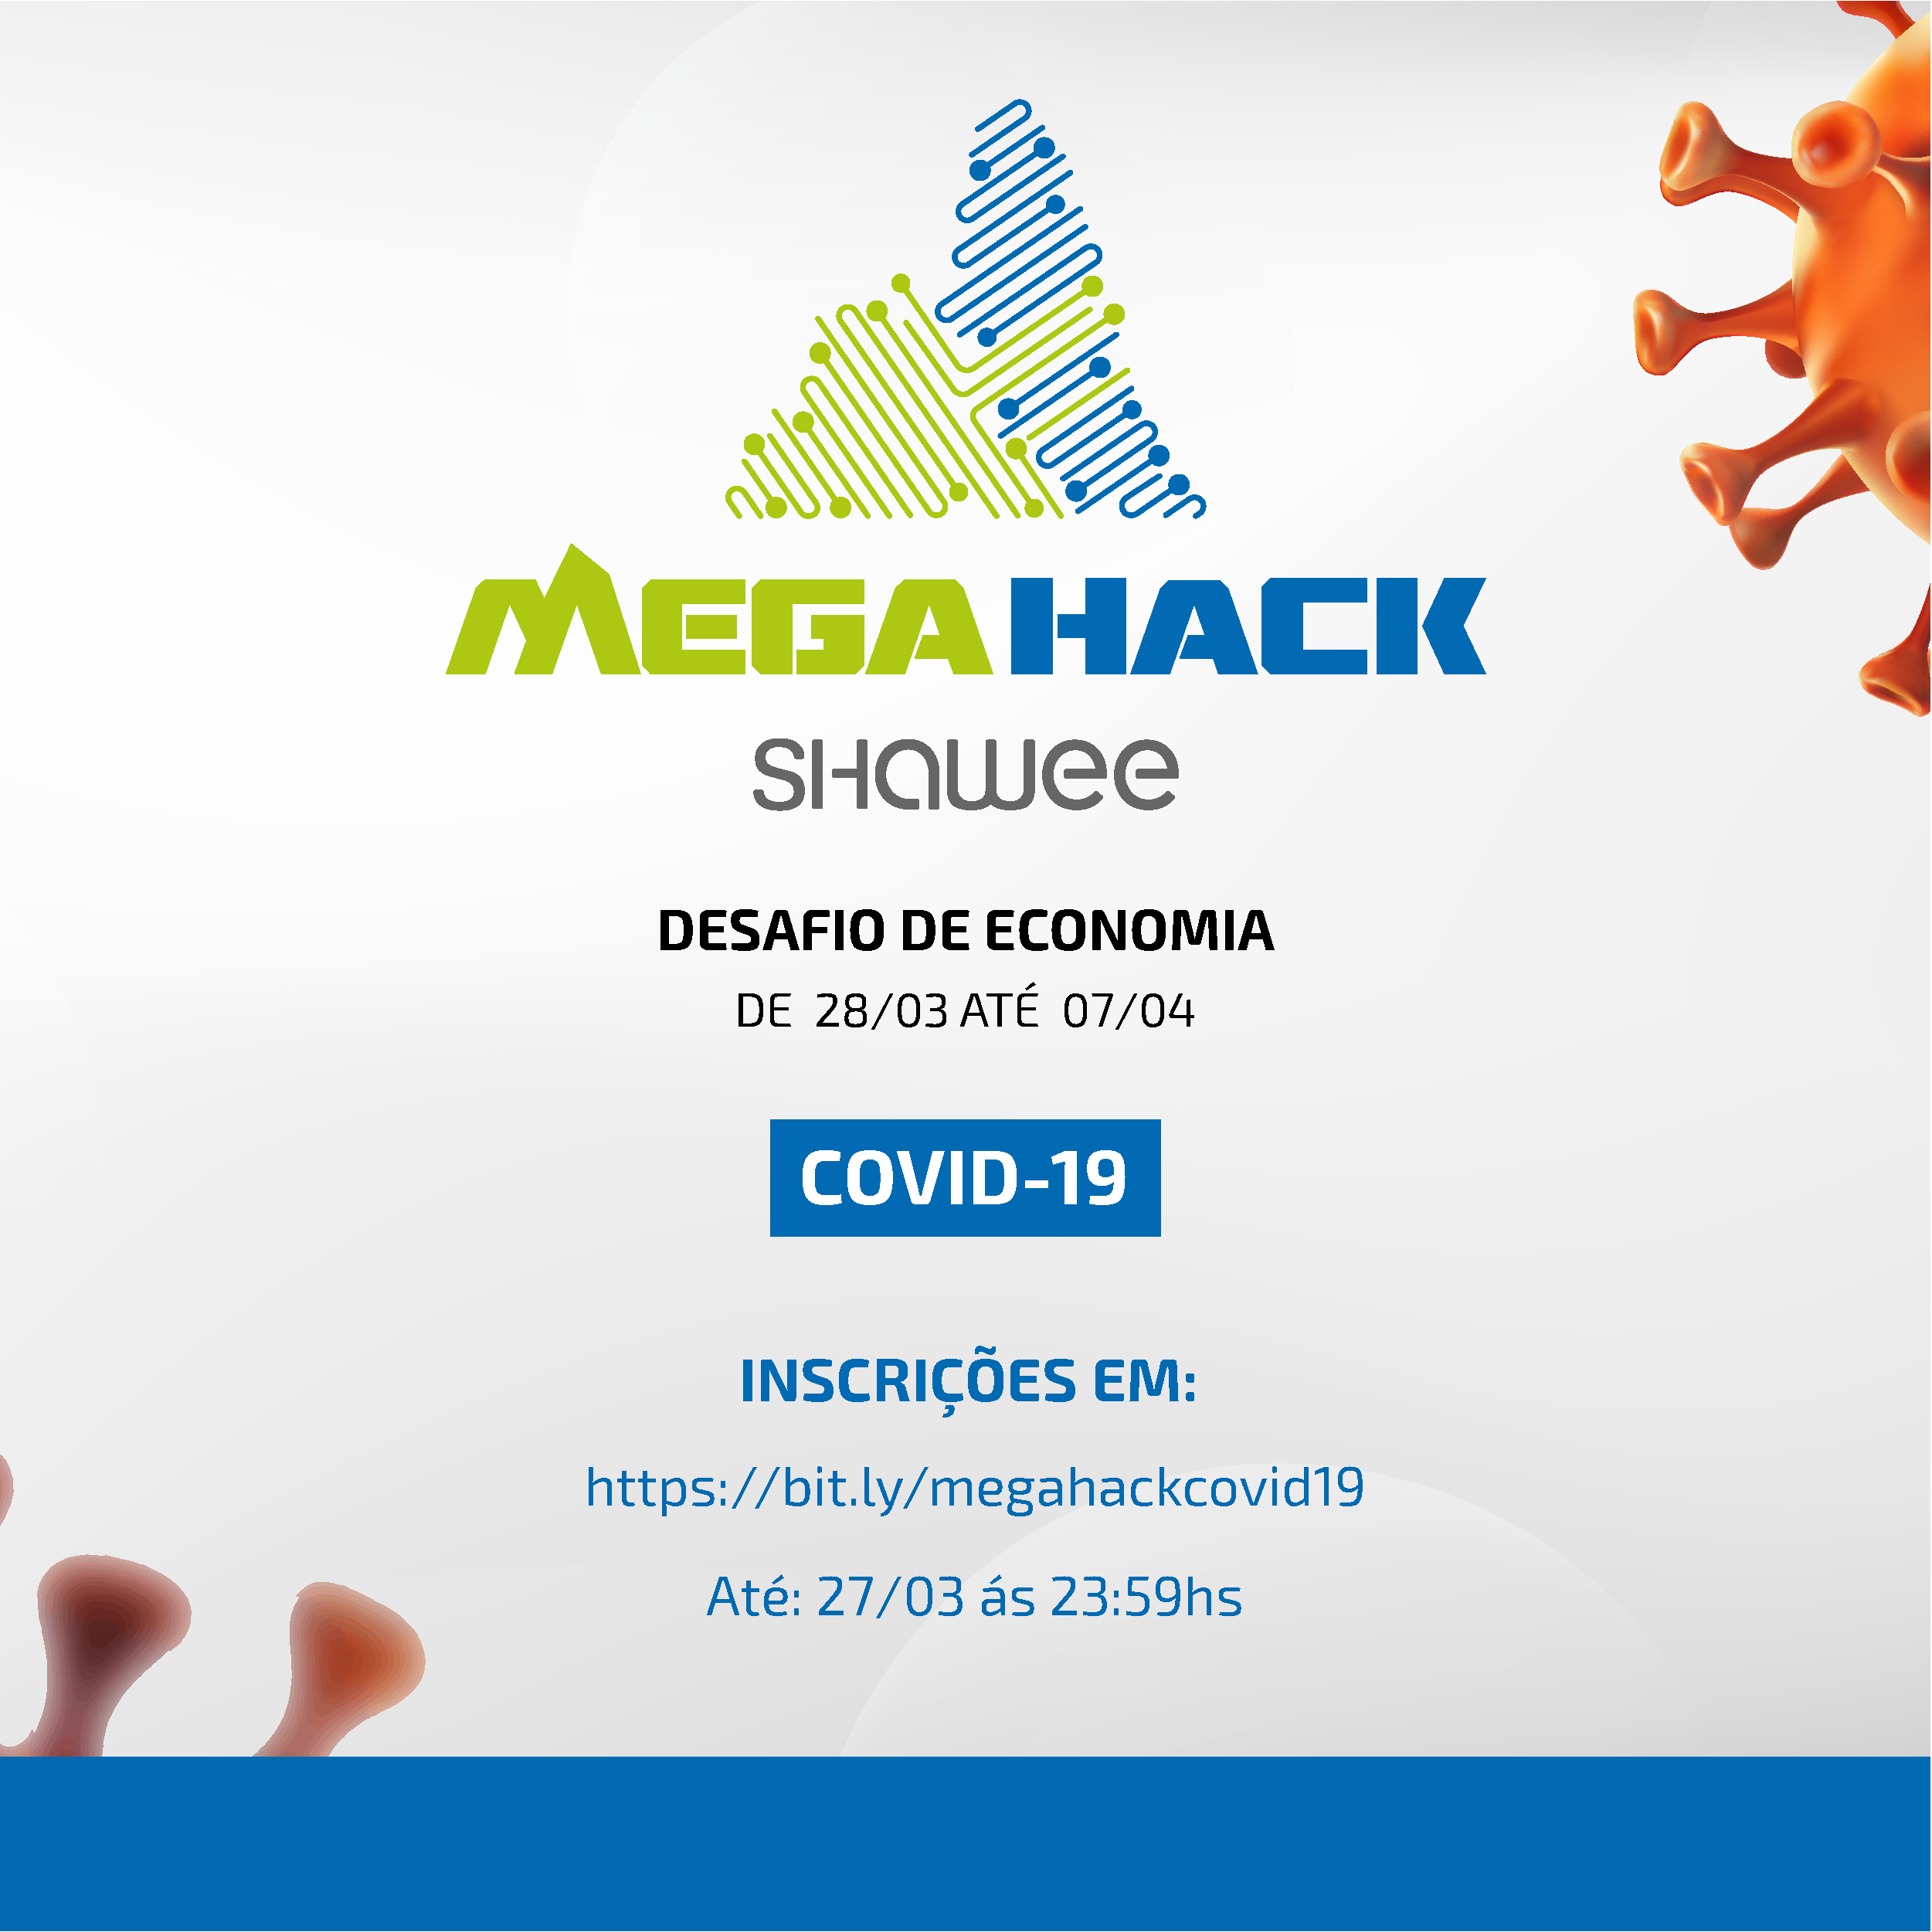 Apex-Brasil apoia maratona criativa Mega Hack COVID-19  